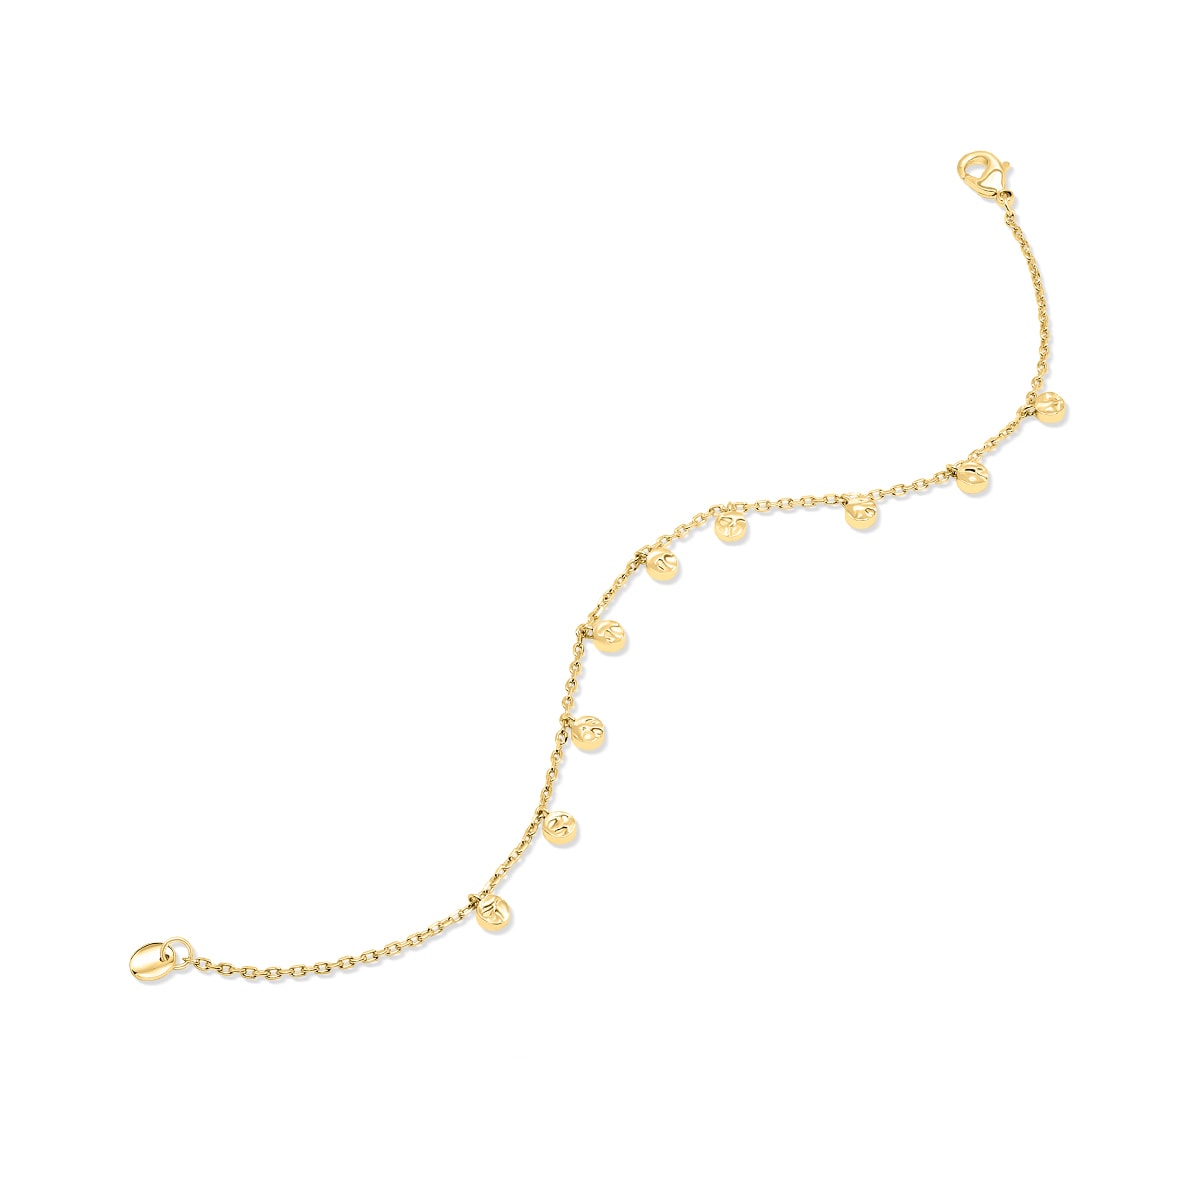 Affordable gold chain bracelet